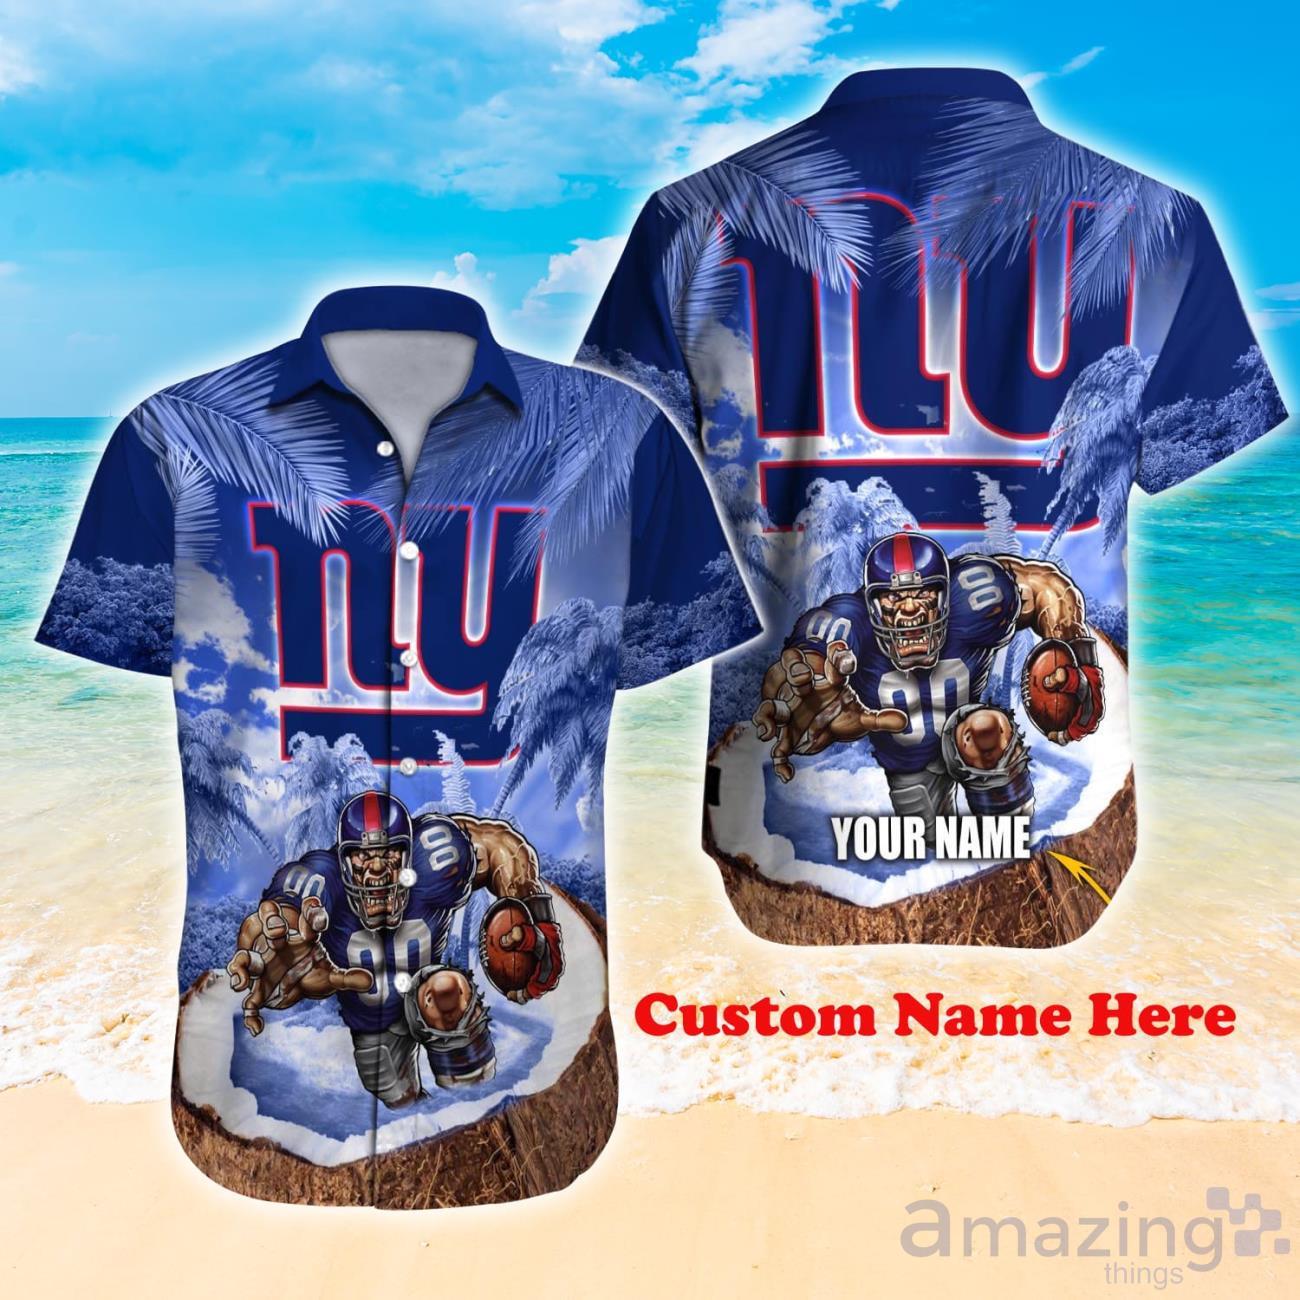 Printed T-shirt - Blue/NY Giants - Men